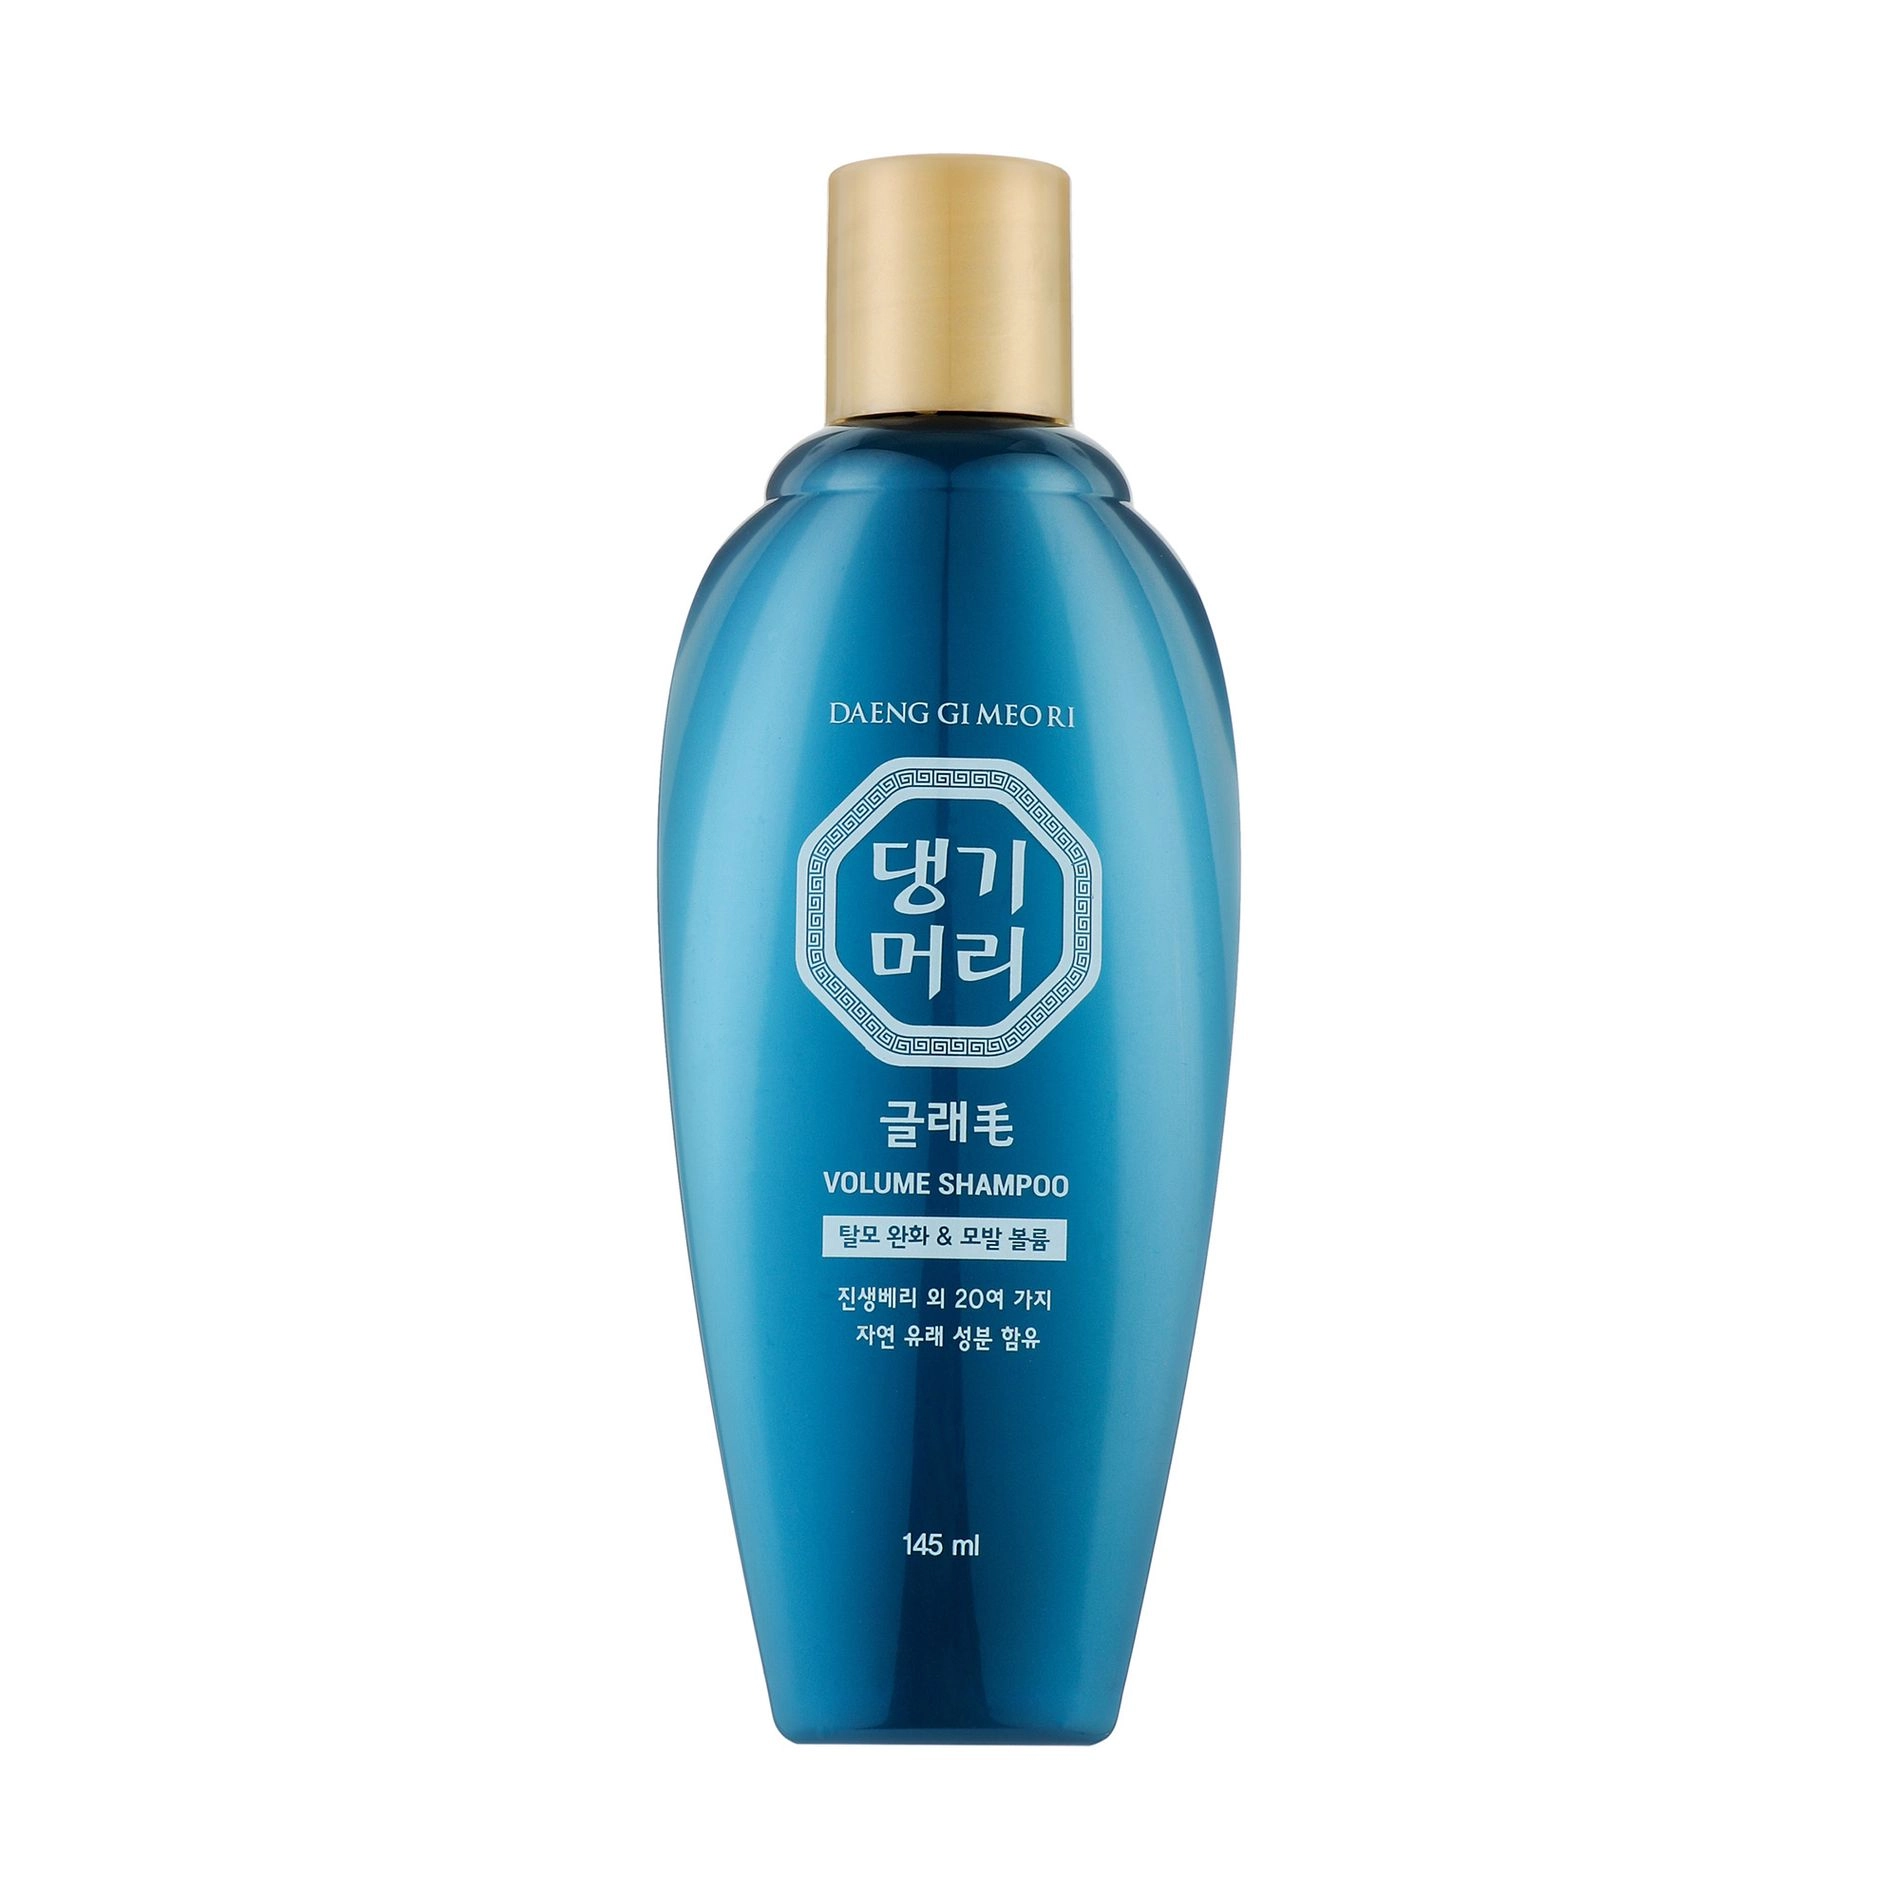 Шампунь для объема волос - Daeng Gi Meo Ri Glamorous Volume Shampoo, 145 мл - фото N3